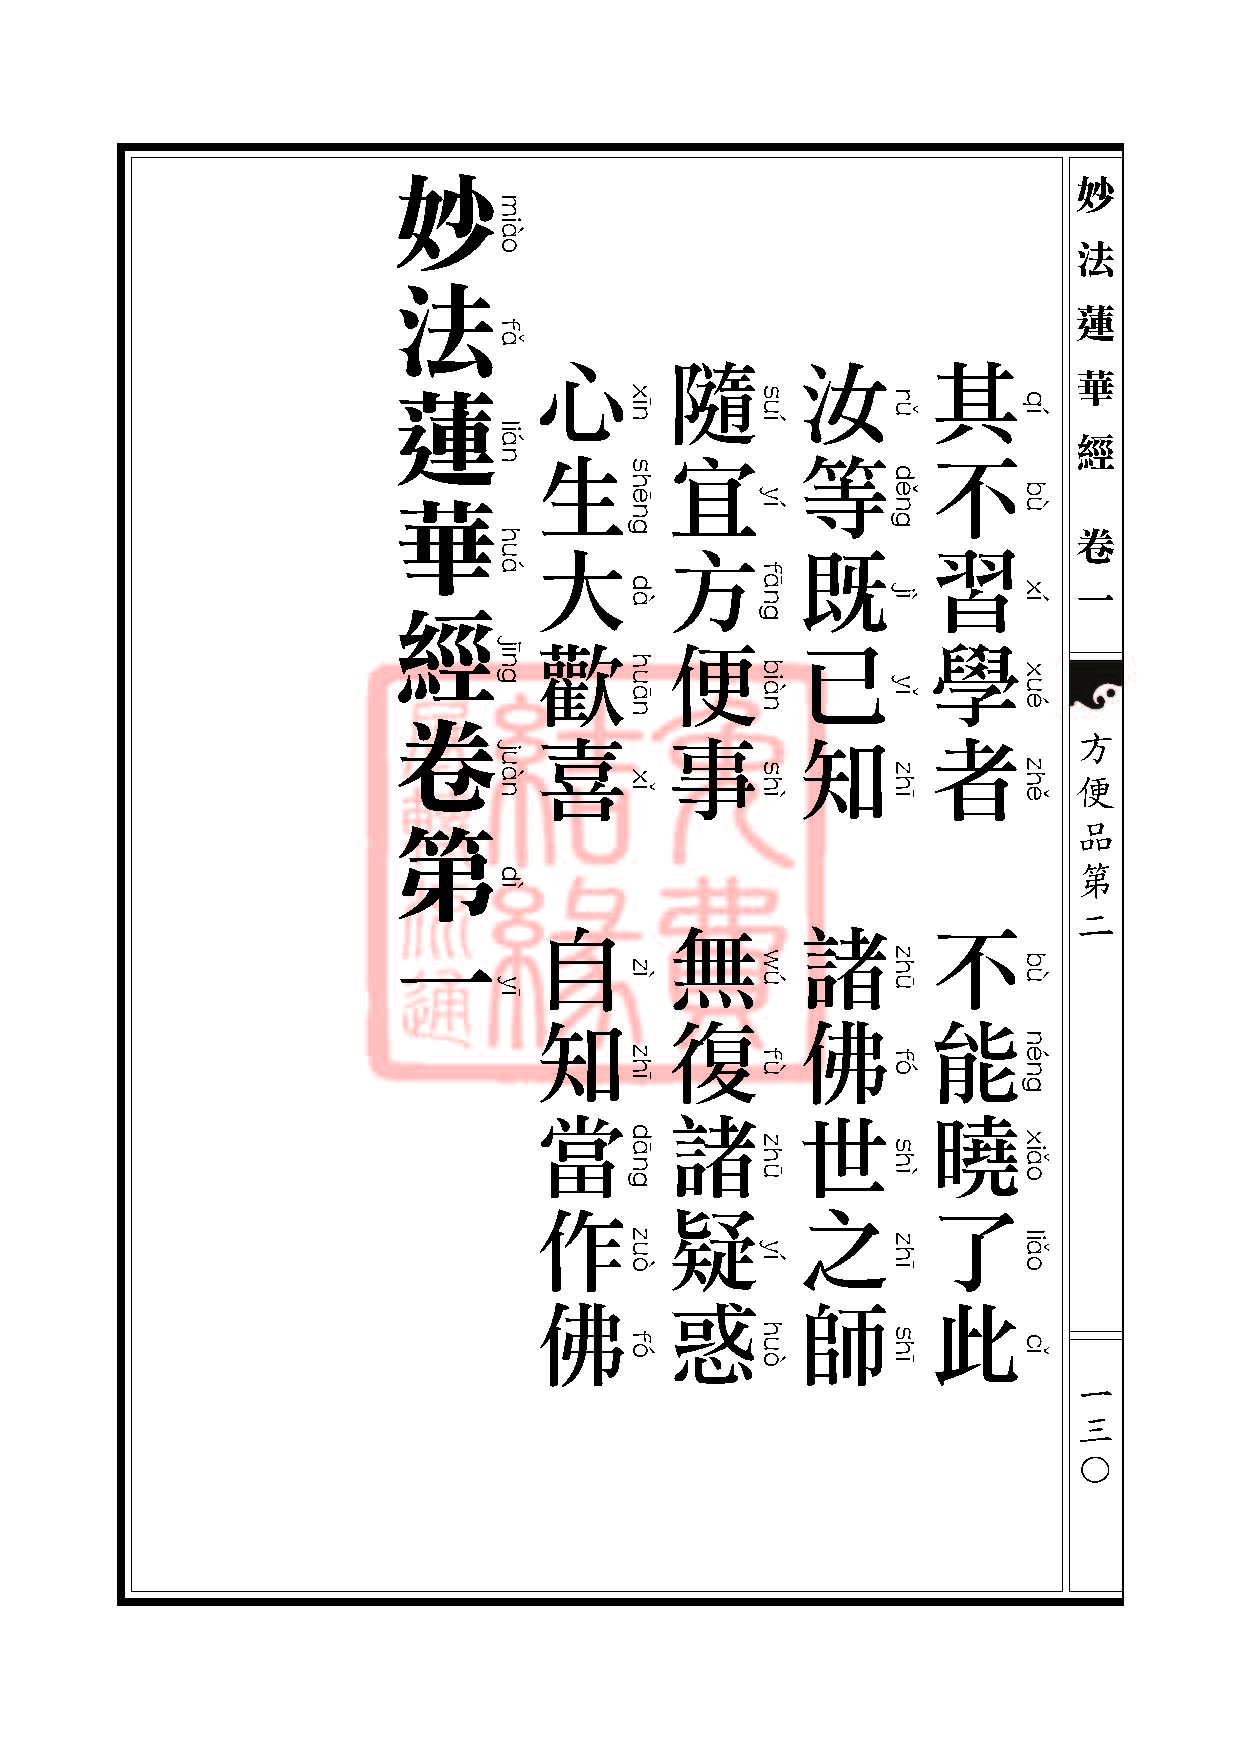 Book_FHJ_HK-A6-PY_Web_ҳ_130.jpg